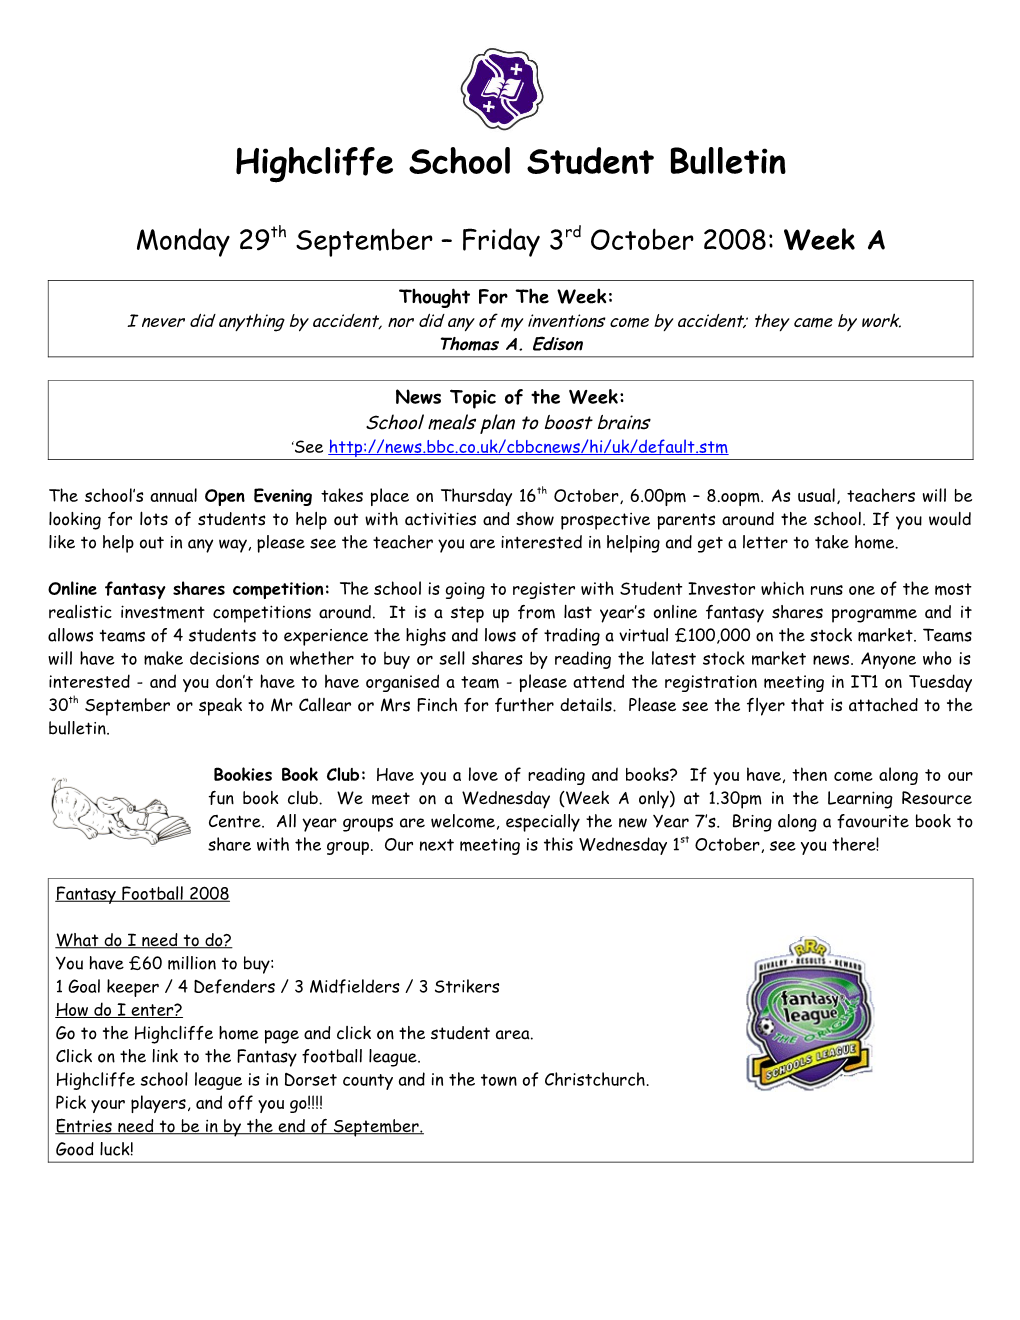 Highcliffe School Student Bulletin s1